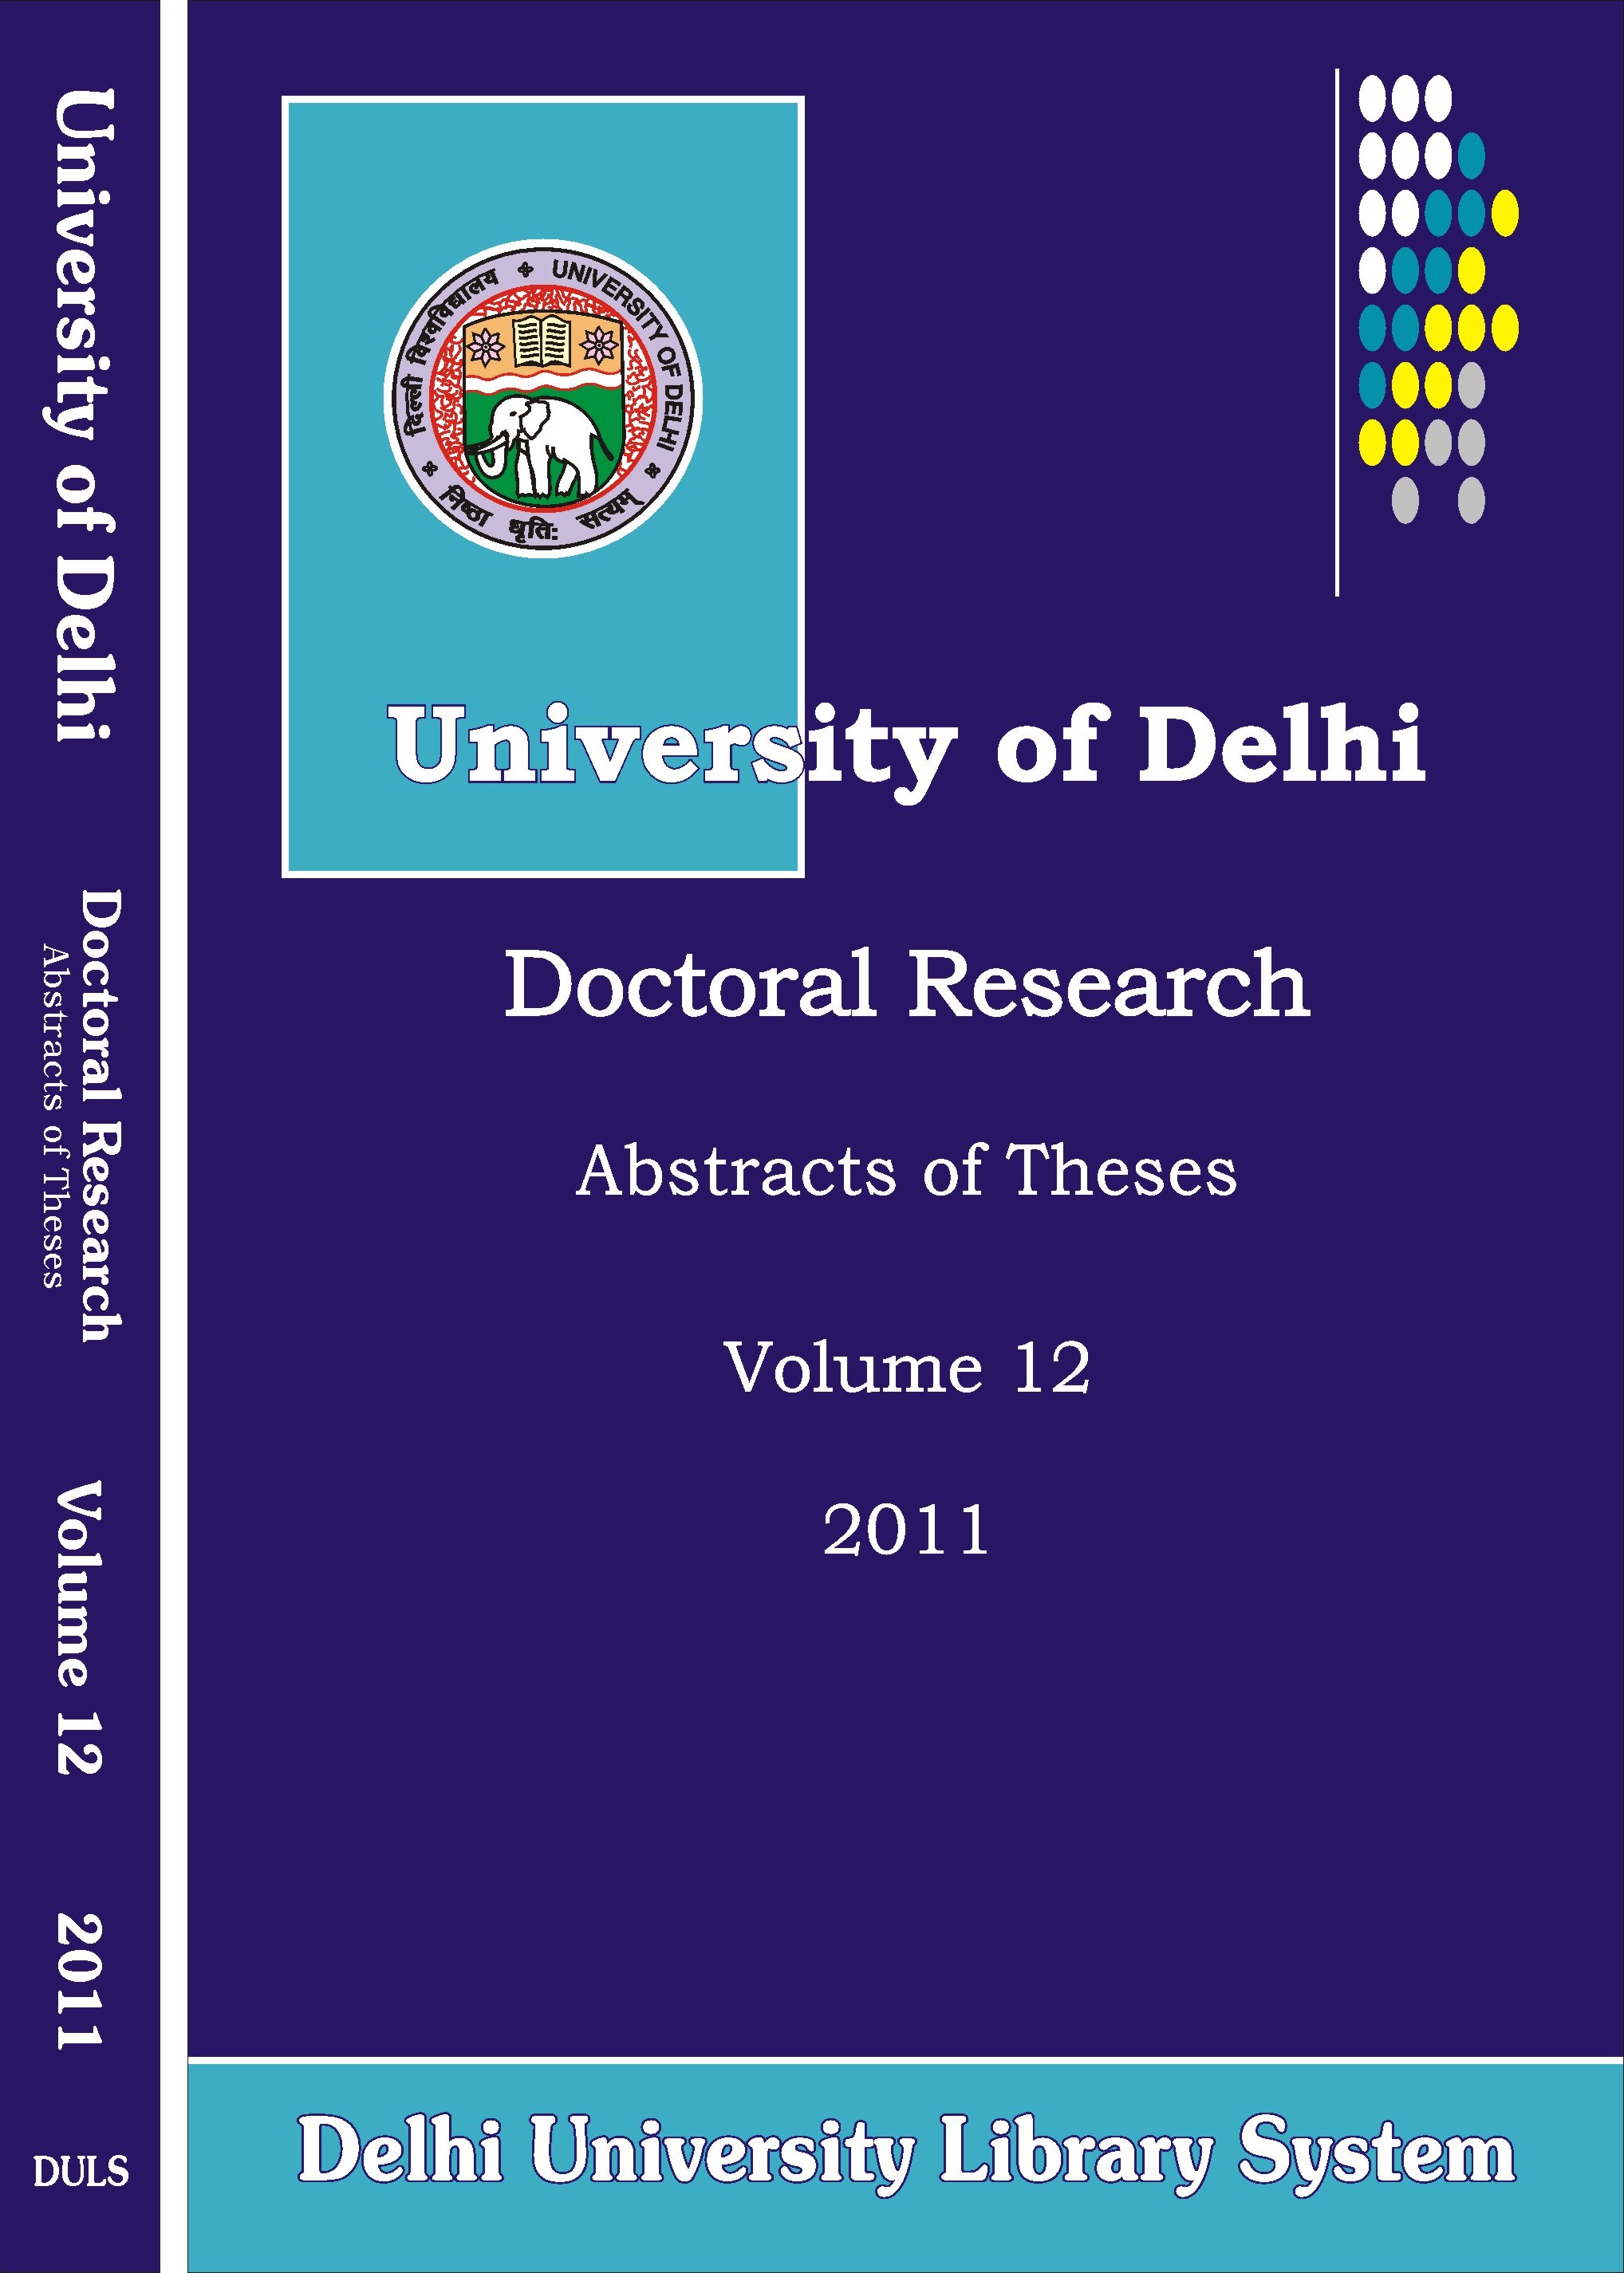 Phd thesis help delhi